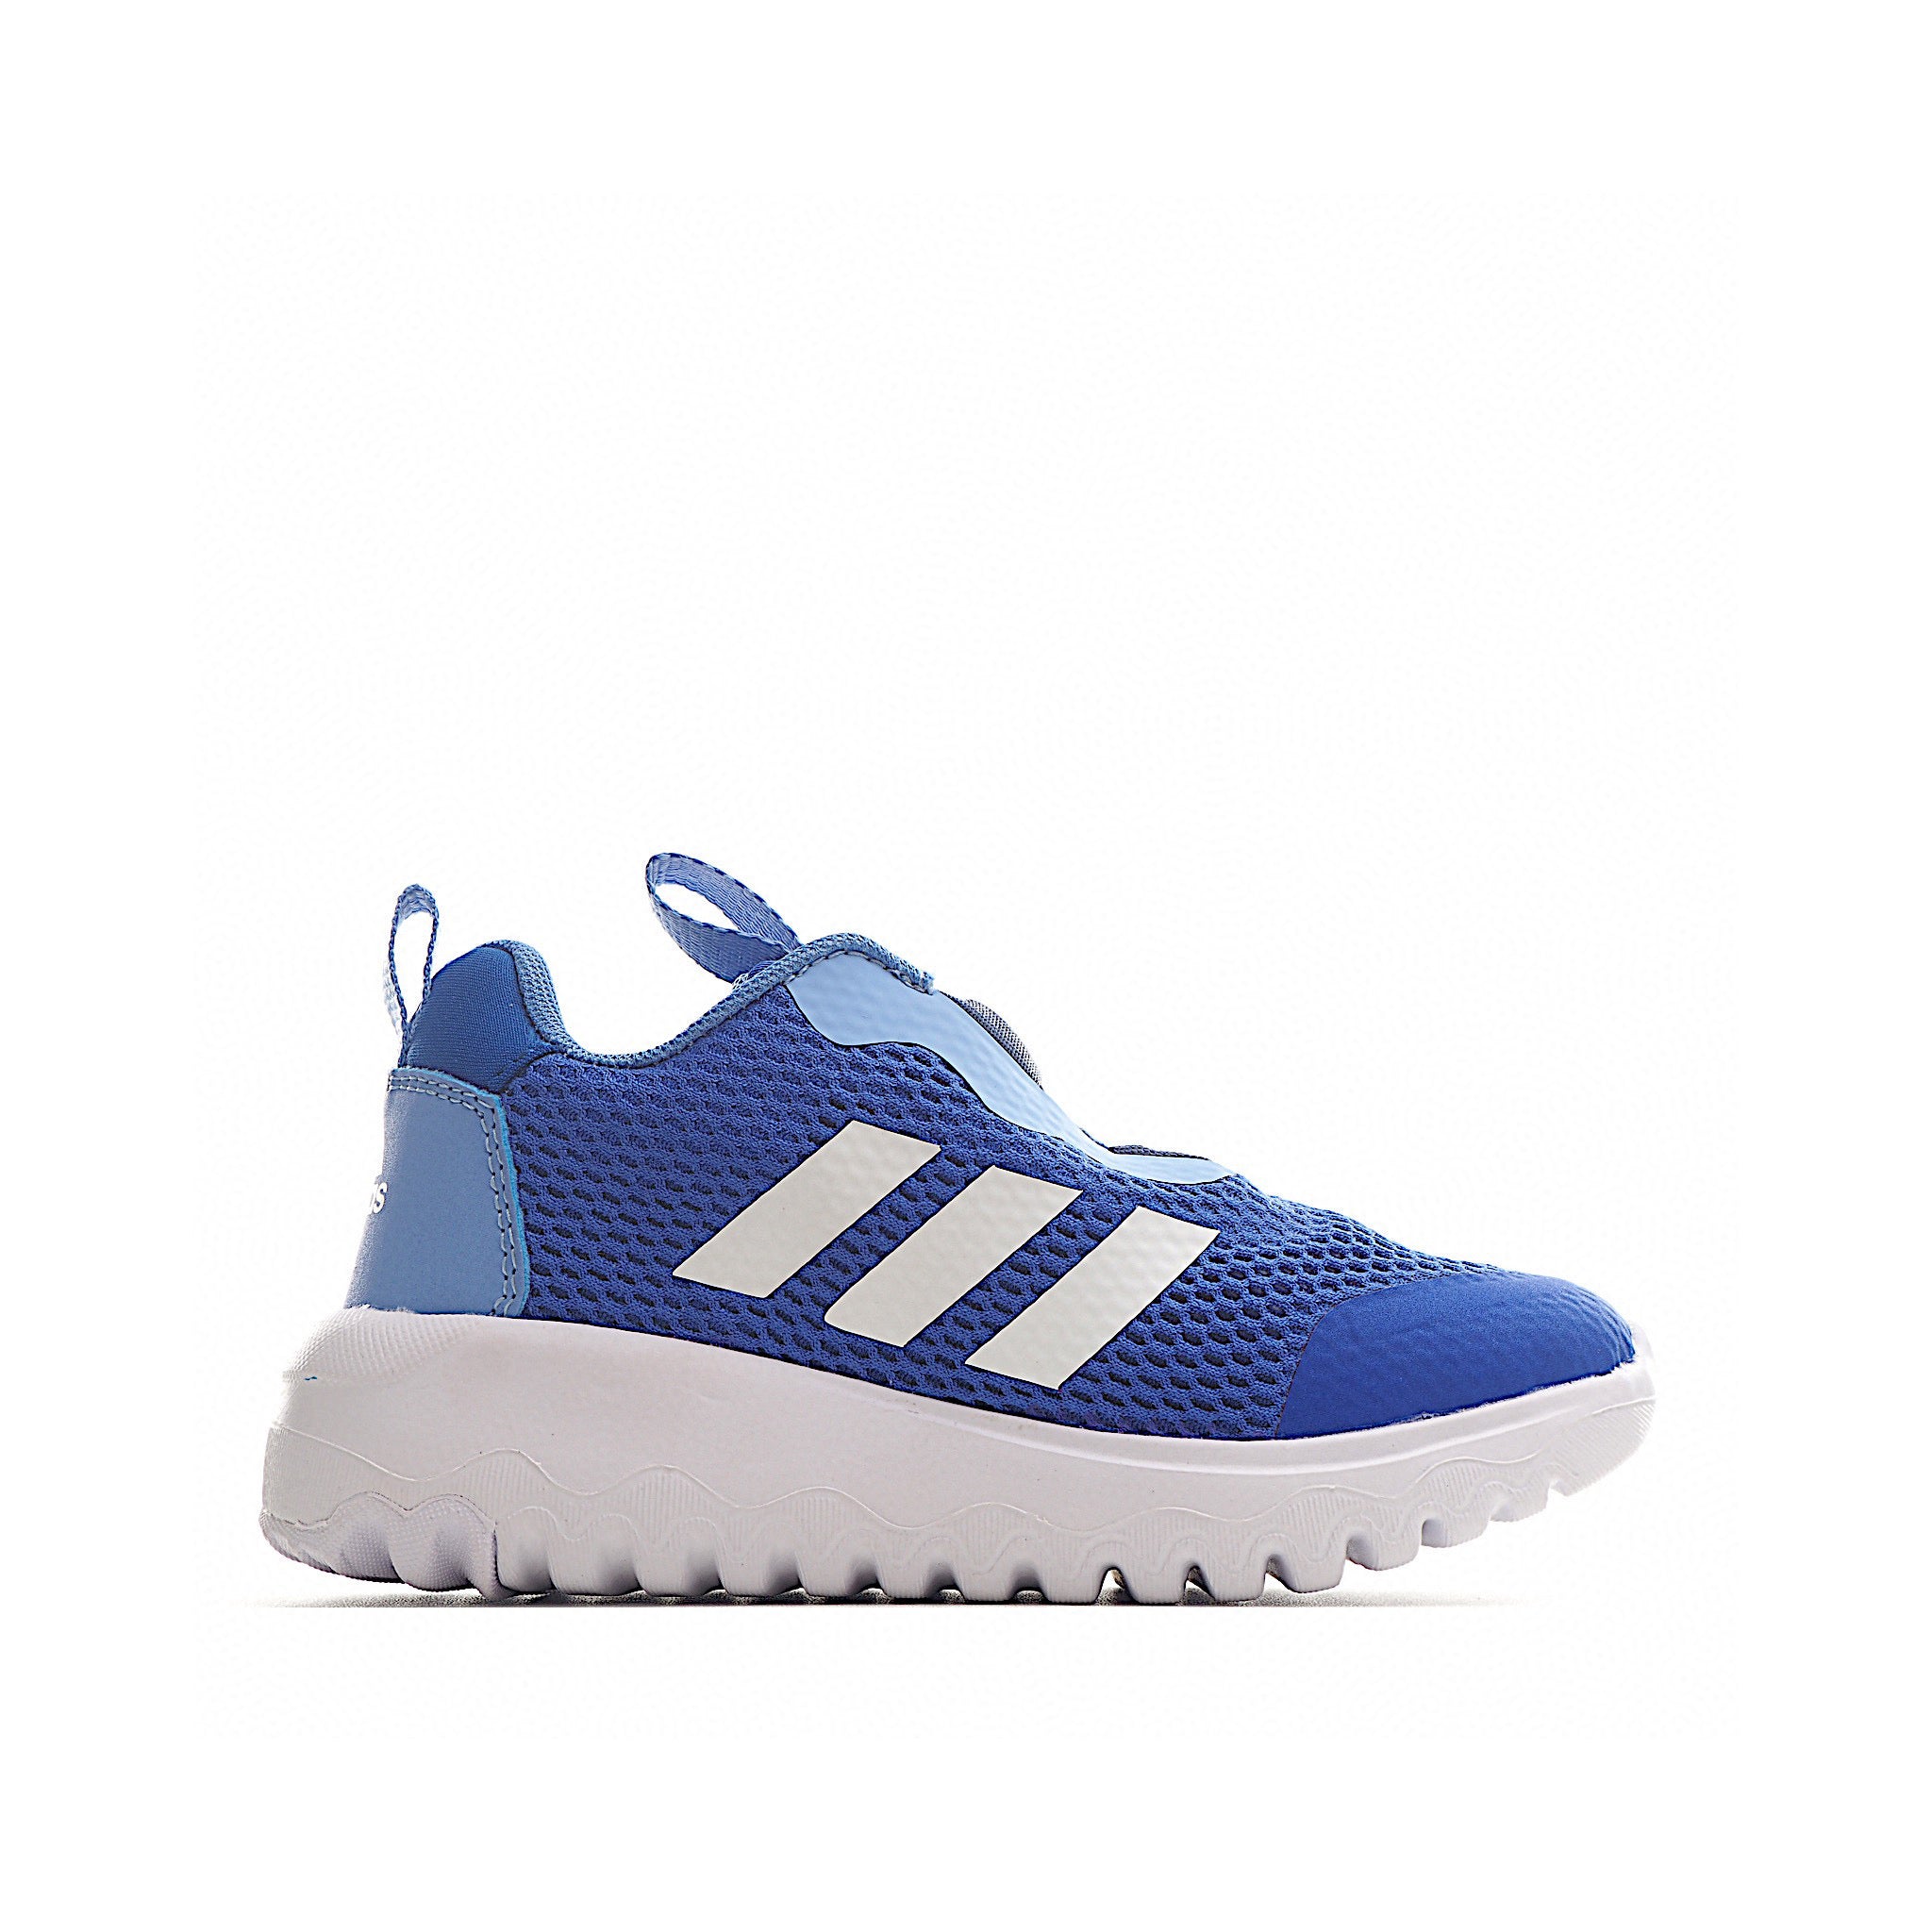 Adidas running blue shoes